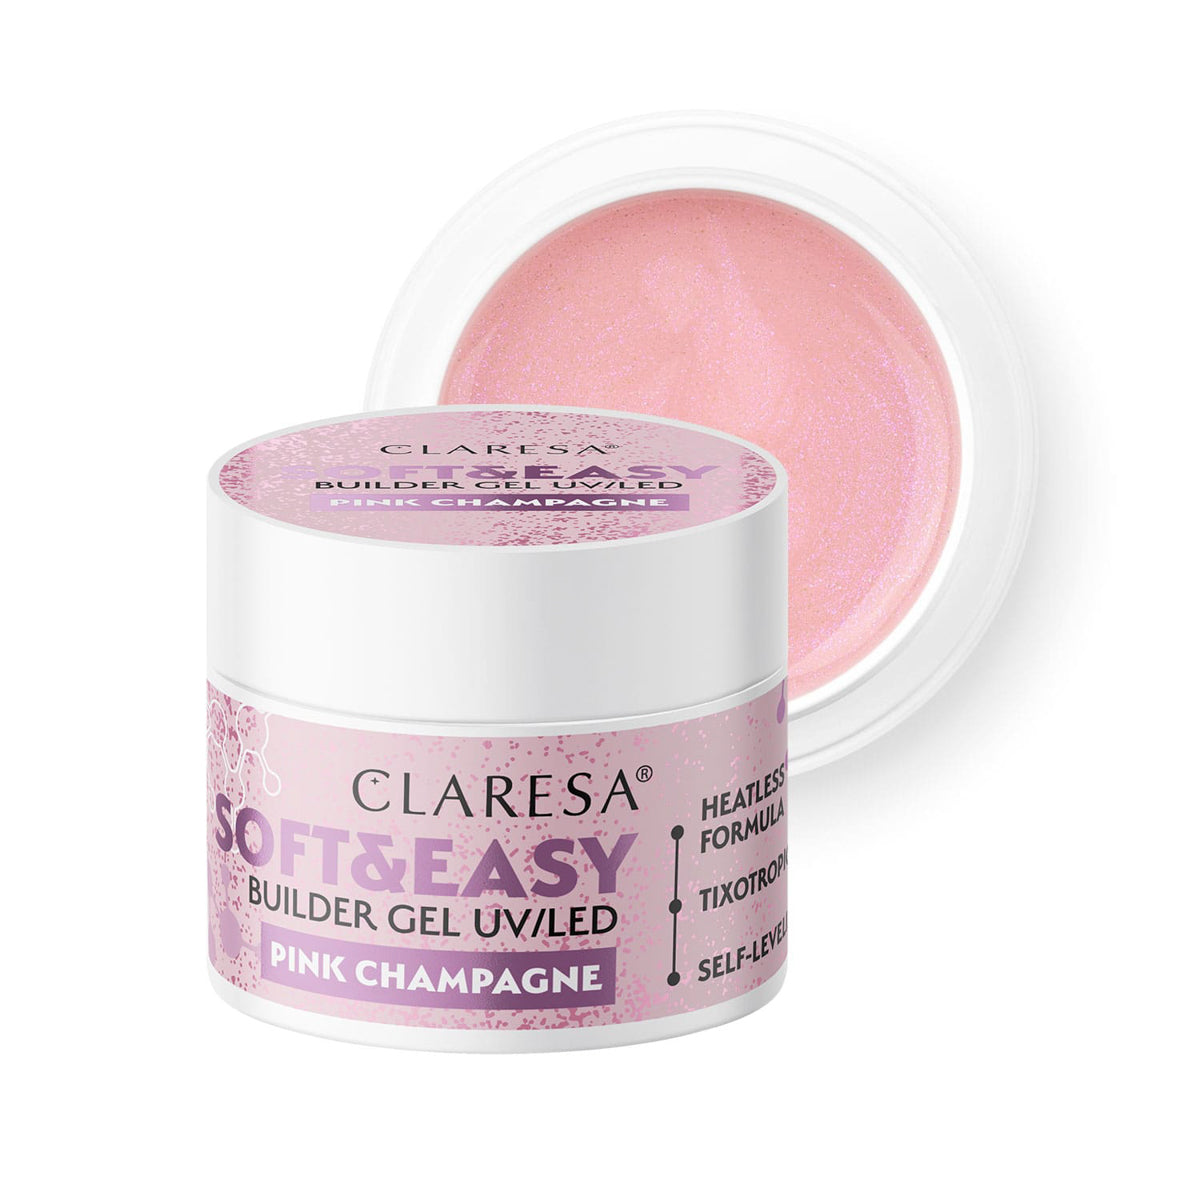 Claresa Soft&Easy bouwgel roze champagne 45g